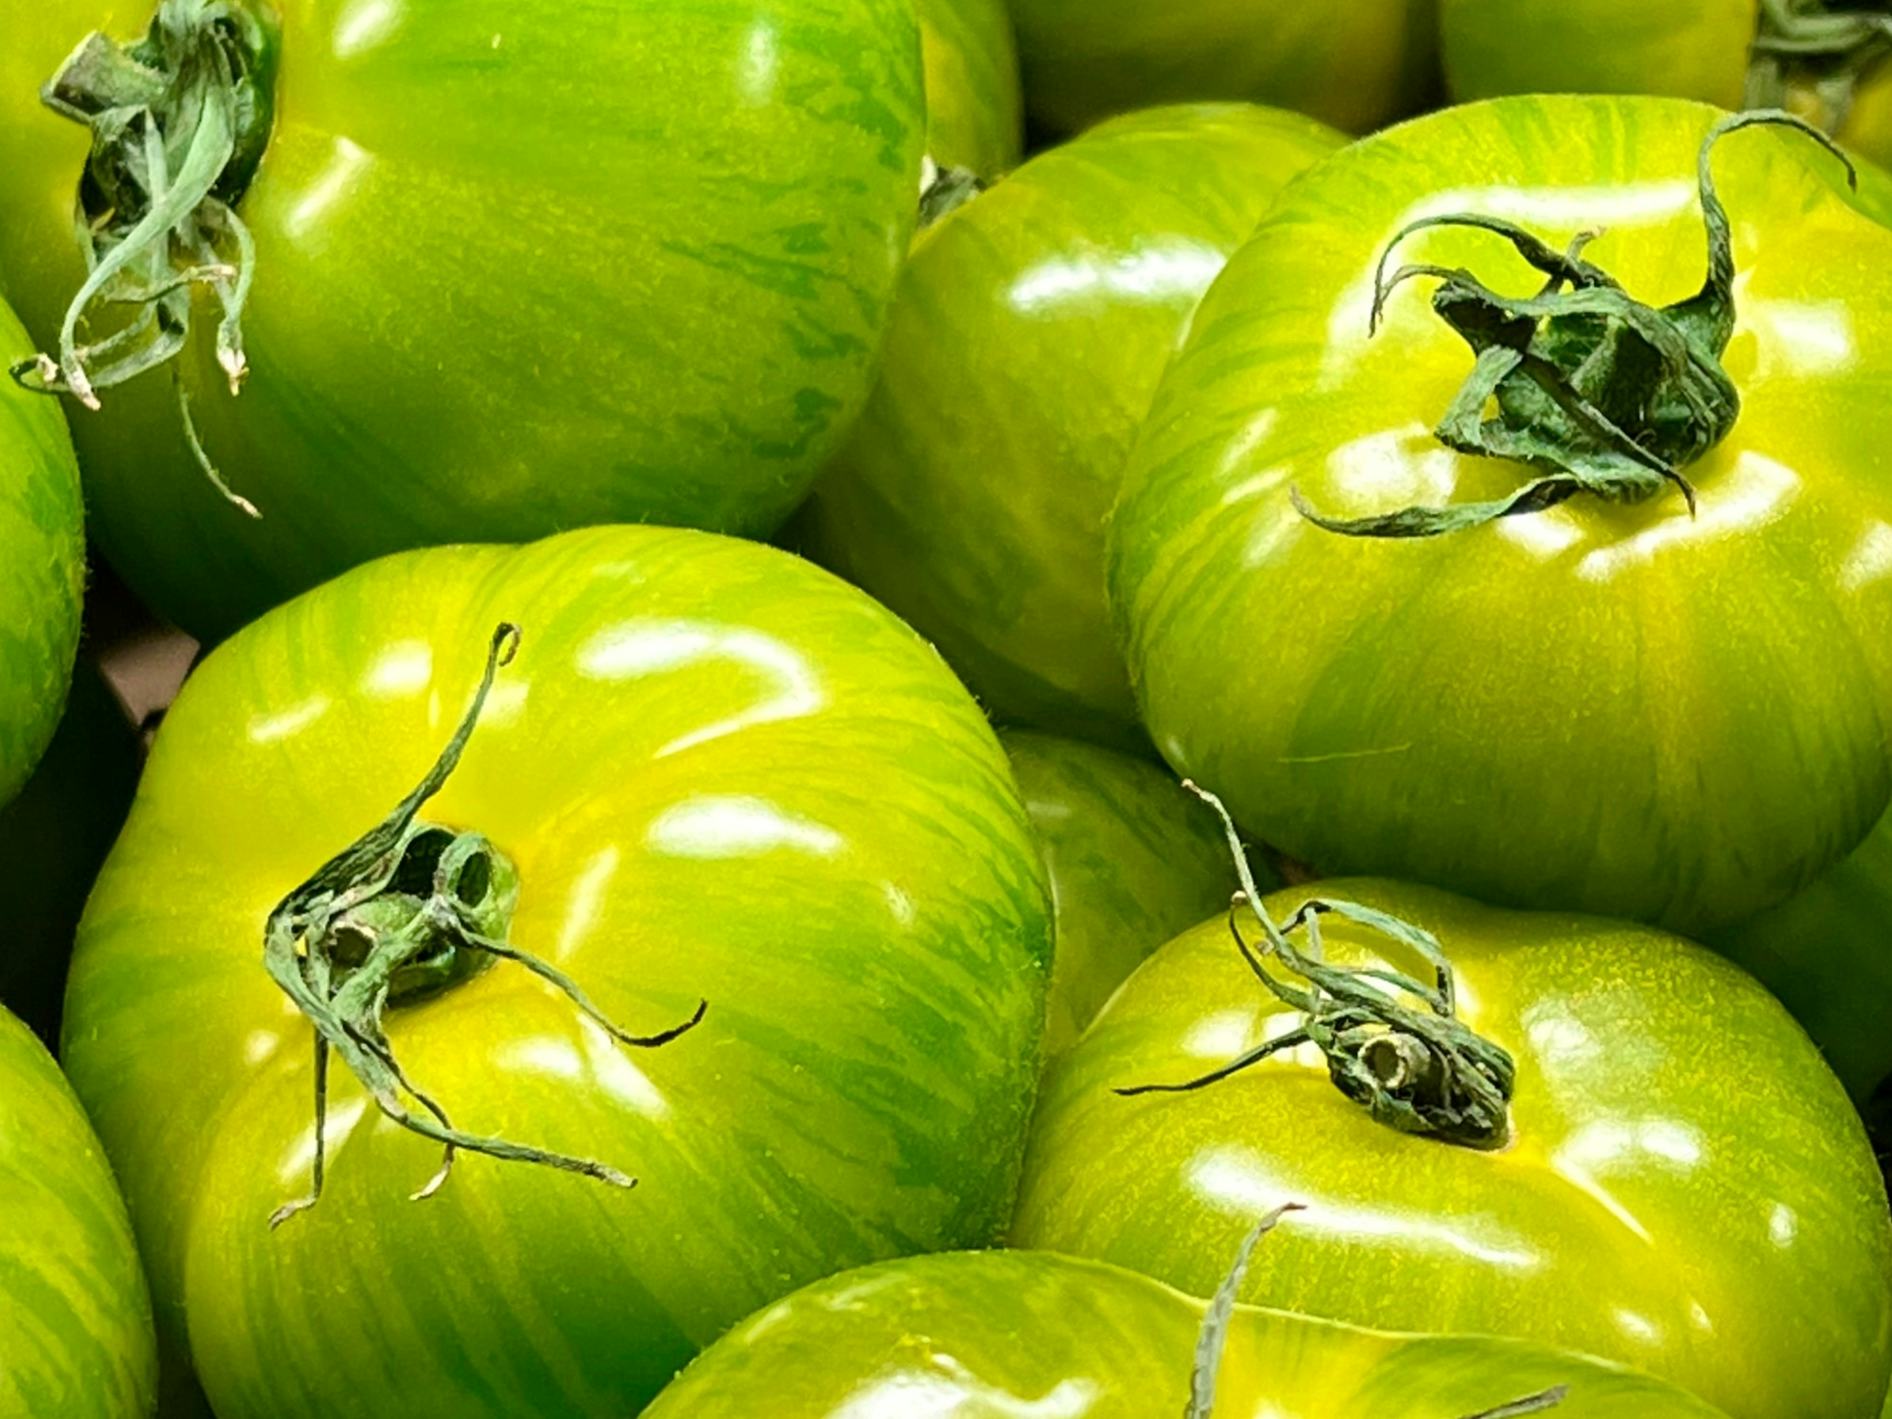 Organic Green Zebra Tomatoes, Mimelis - Maraîcher, Carouge, image 1 | Mimelis